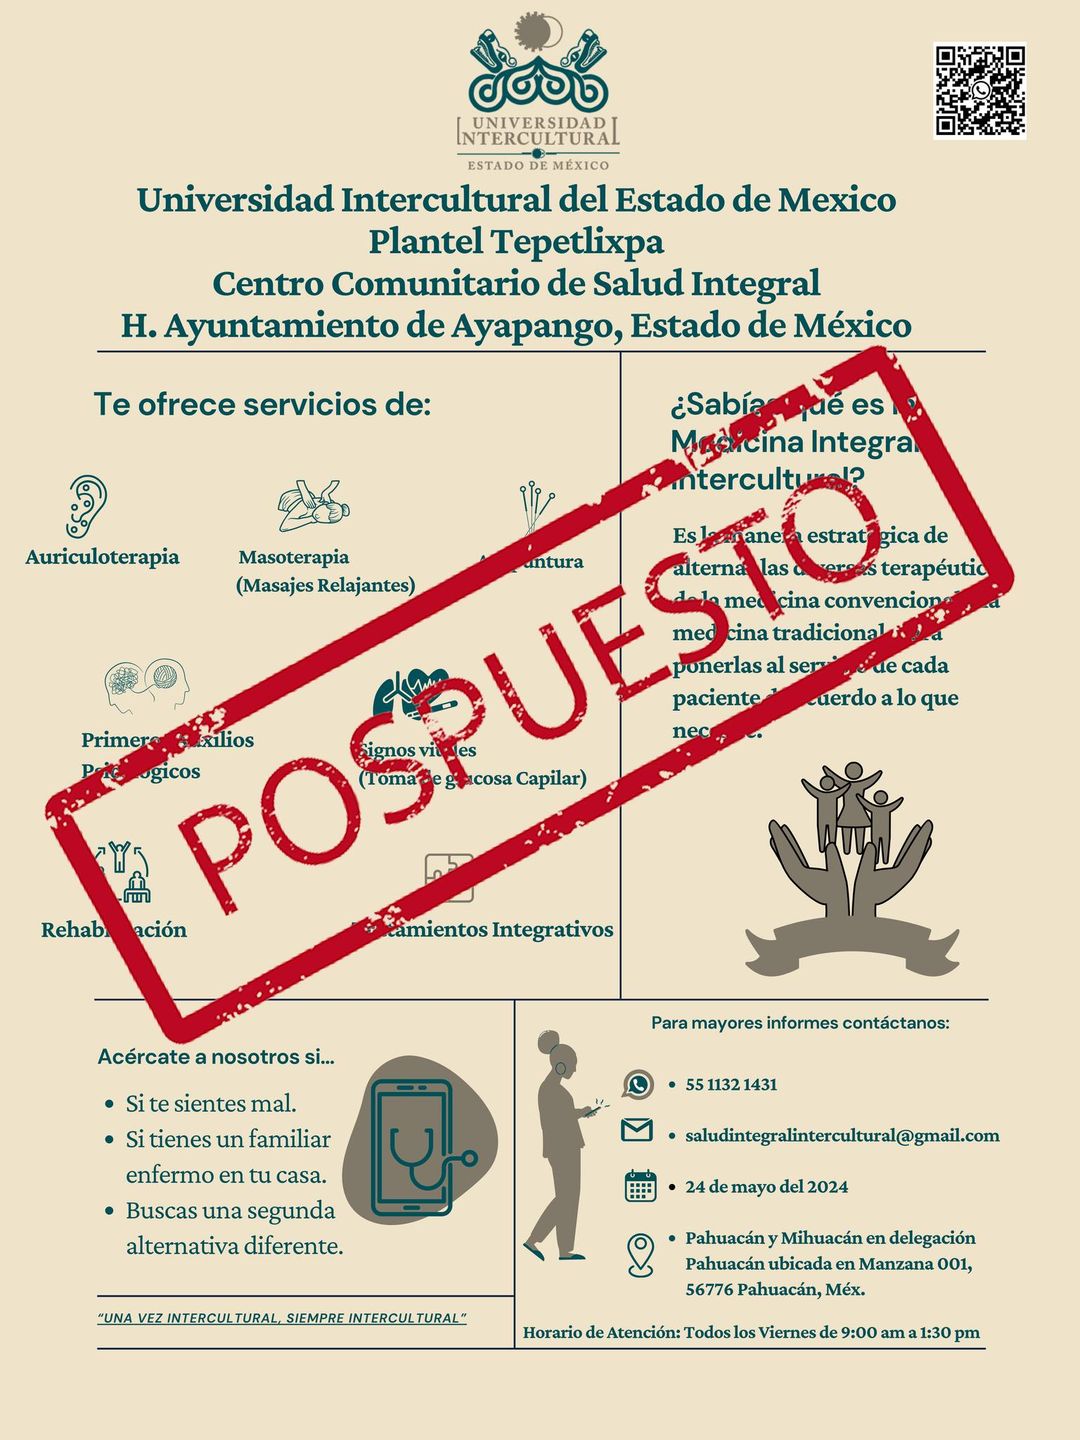 La Universidad Intercultural del Estado de Mexico Plantel Tepetlixpa te